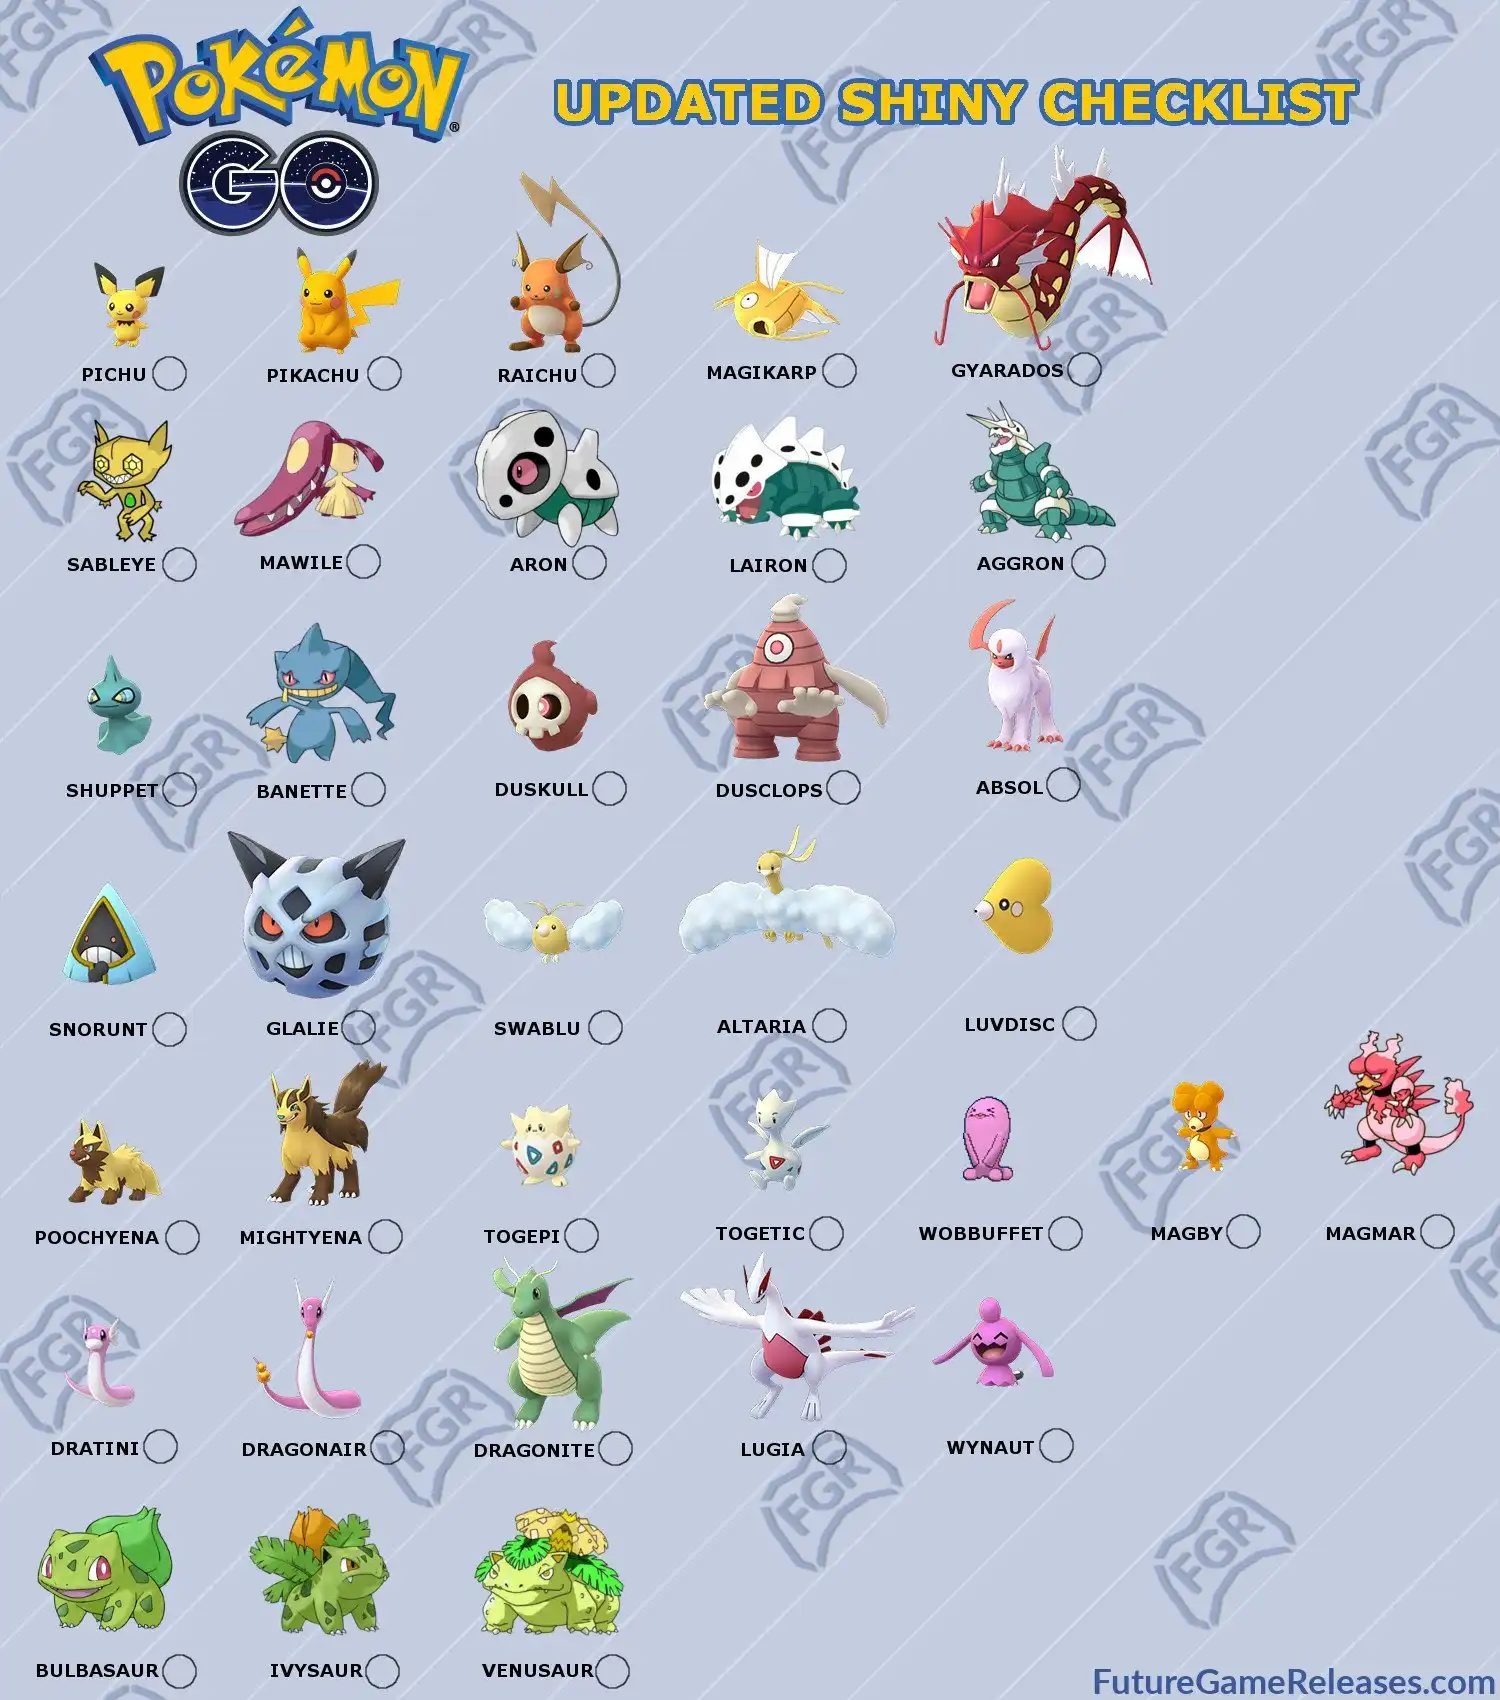 Updated Checklist of All Shiny Pokemon in Pokemon Go